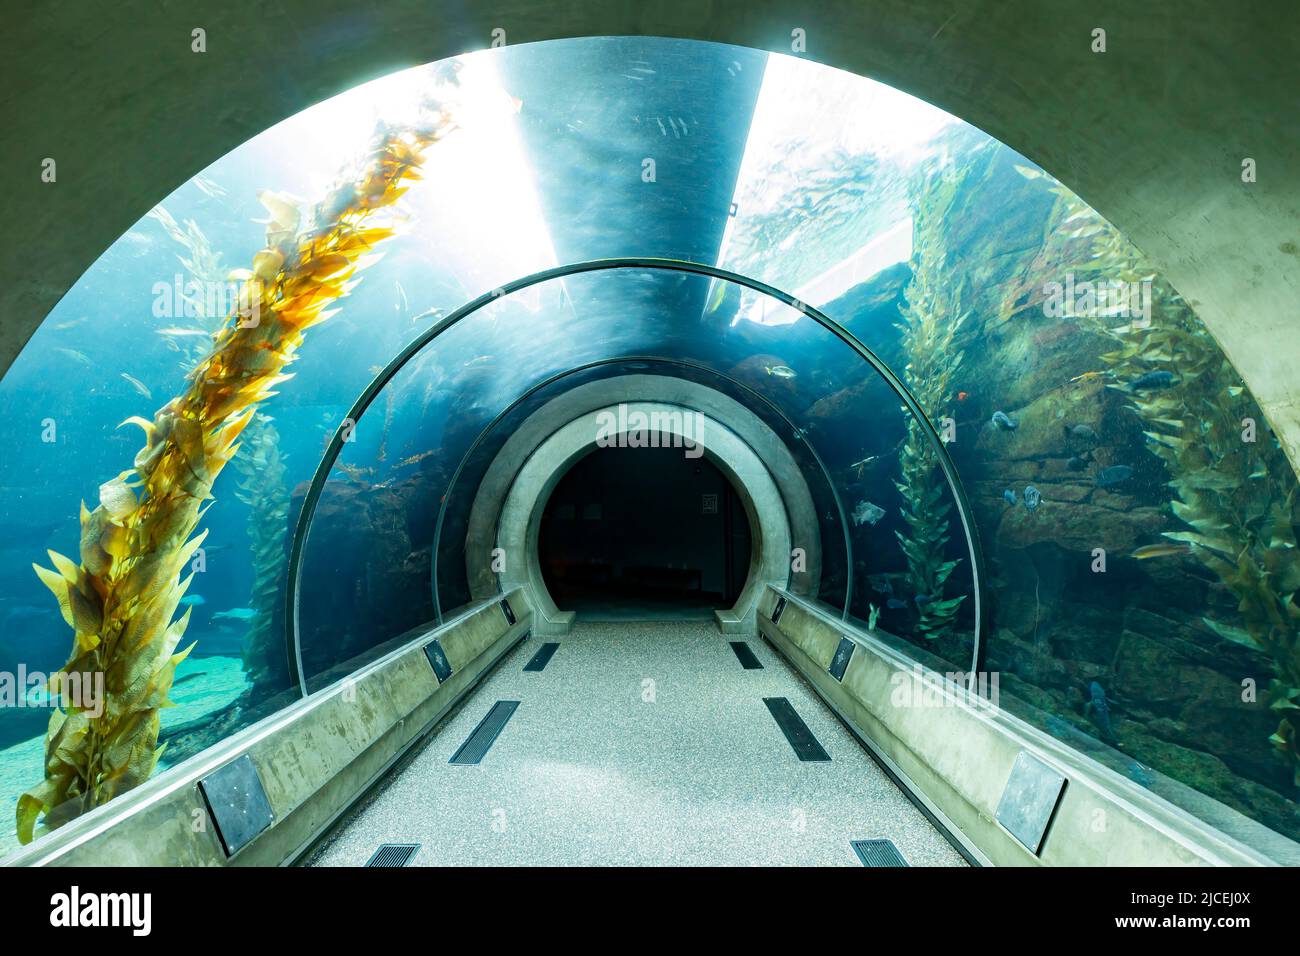 Los Angeles, JAN 29 2015 - Aquarium tunnel in California Science Center Stock Photo